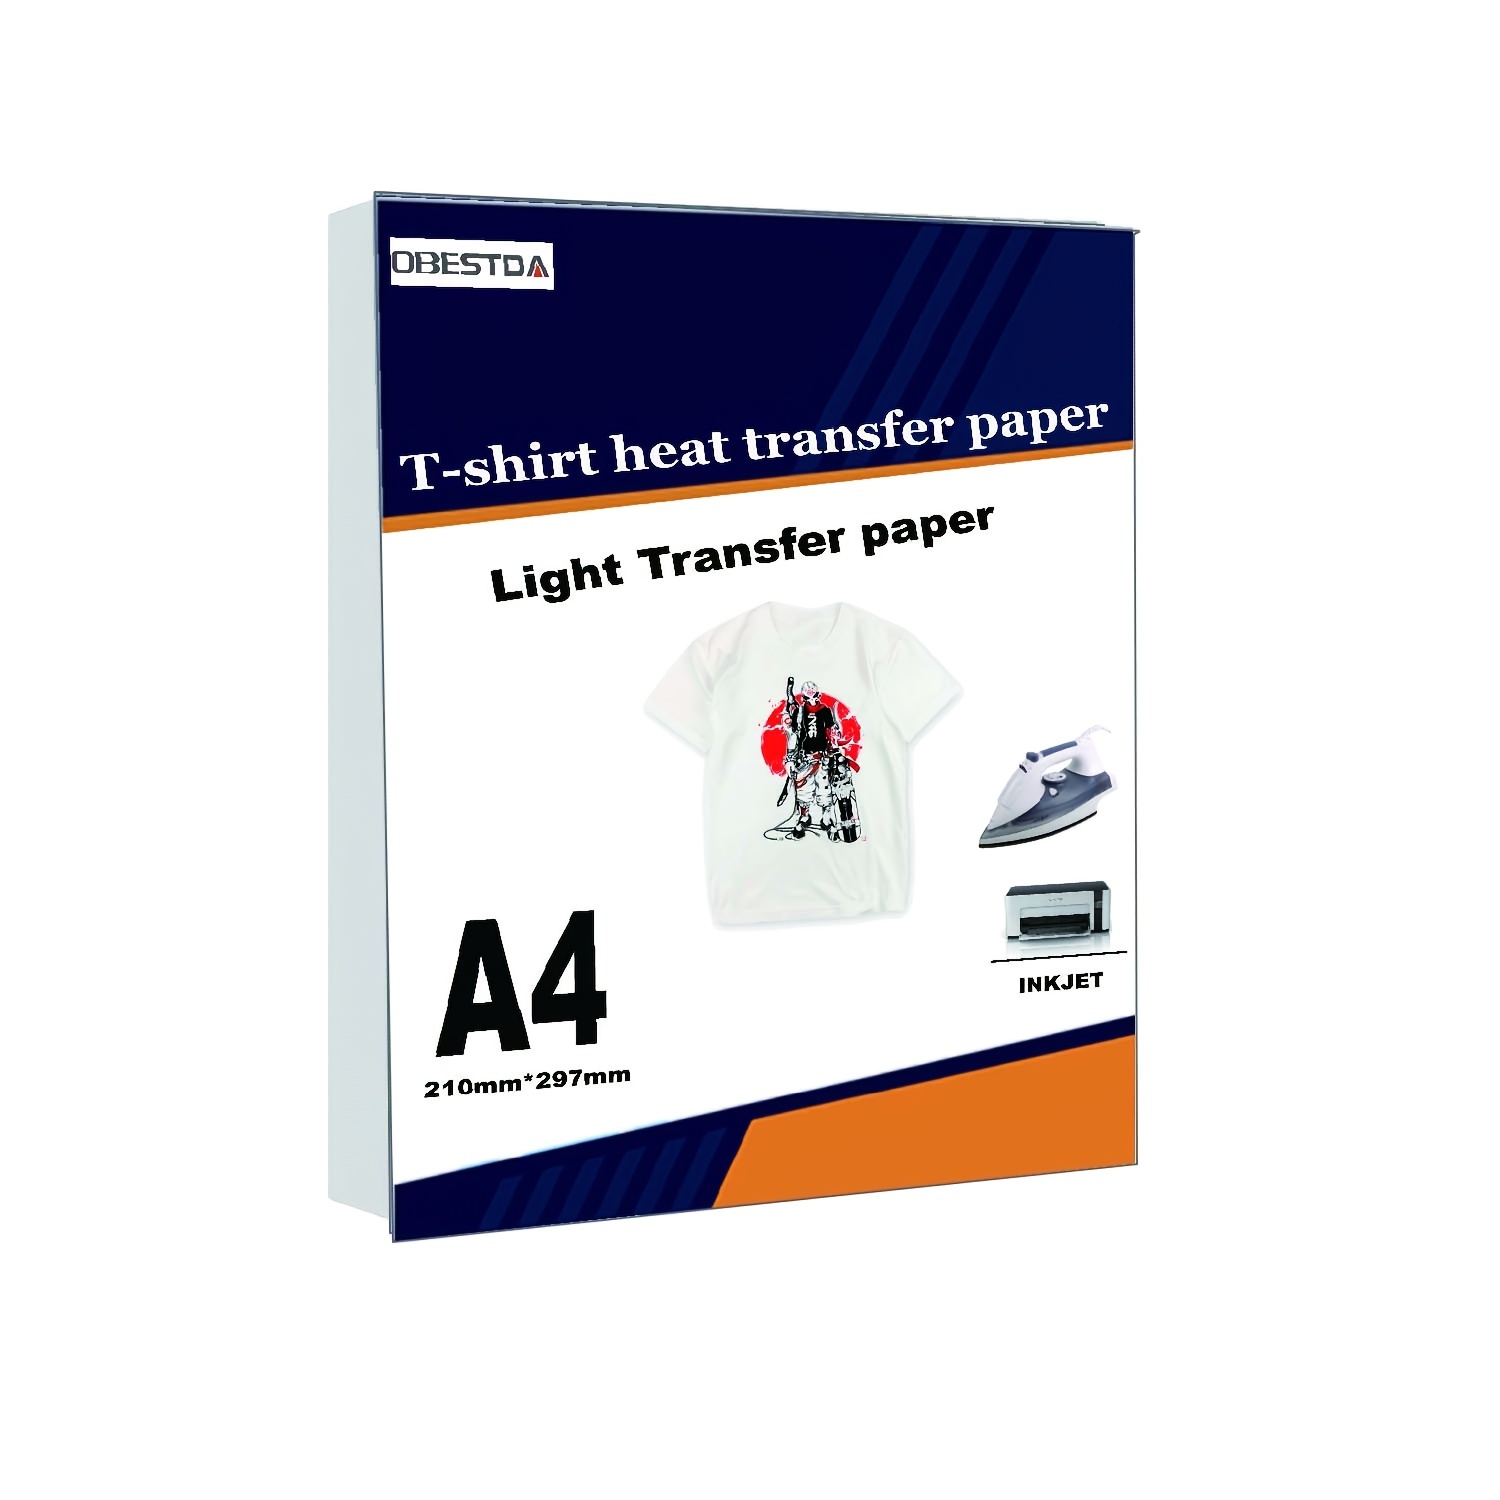  TransOurDream Papel de transferencia de calor para camisetas  oscuras (10 hojas, 8.5 x 11 pulgadas) que brilla en la oscuridad, vinilo de  transferencia de calor imprimible para impresora de inyección 